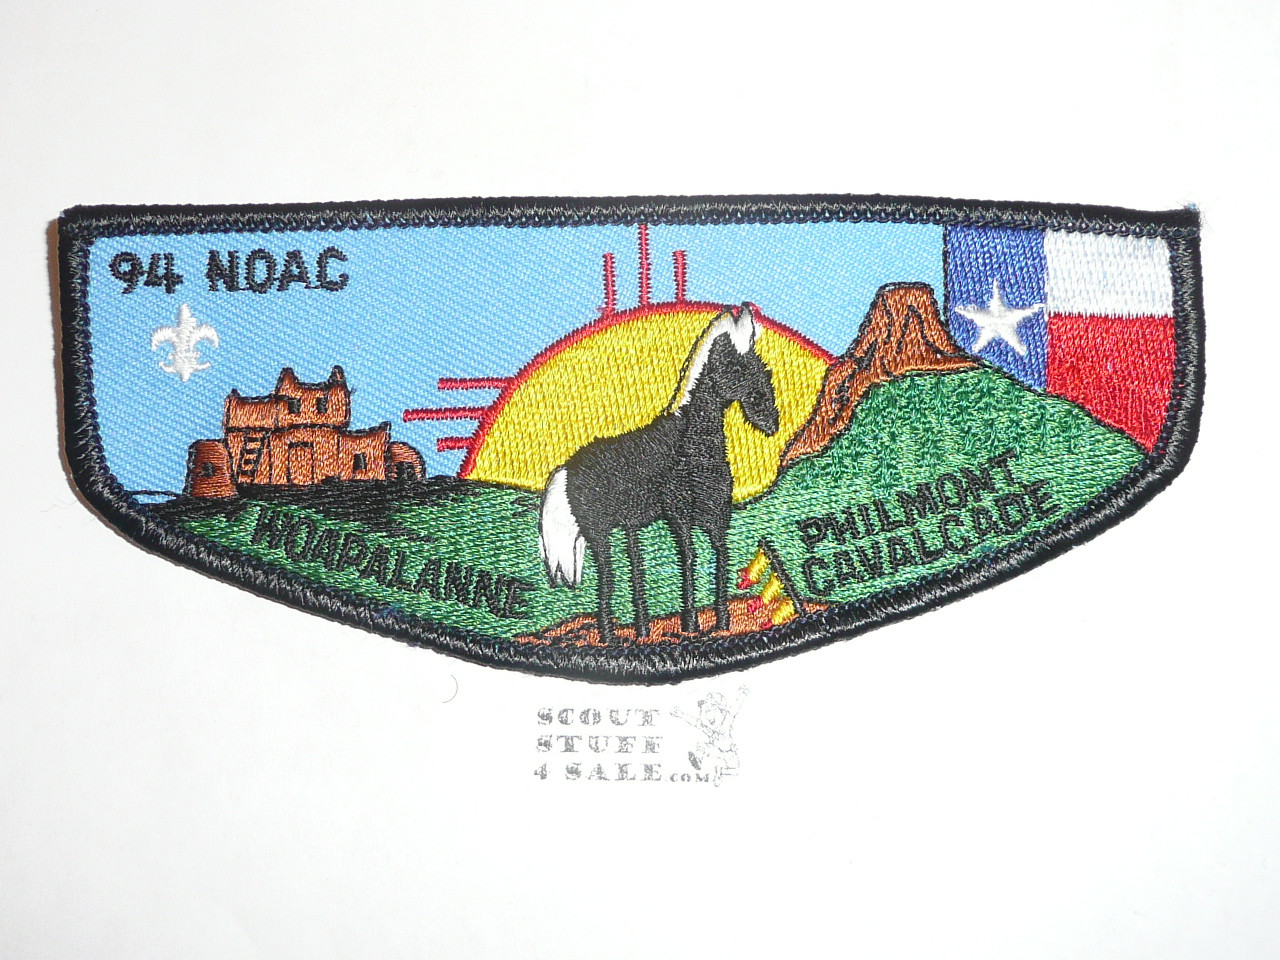 Order of the Arrow Lodge #489 Nishkin Halupa A Pe Lachi Woapalanne f2 1994 NOAC Flap Patch